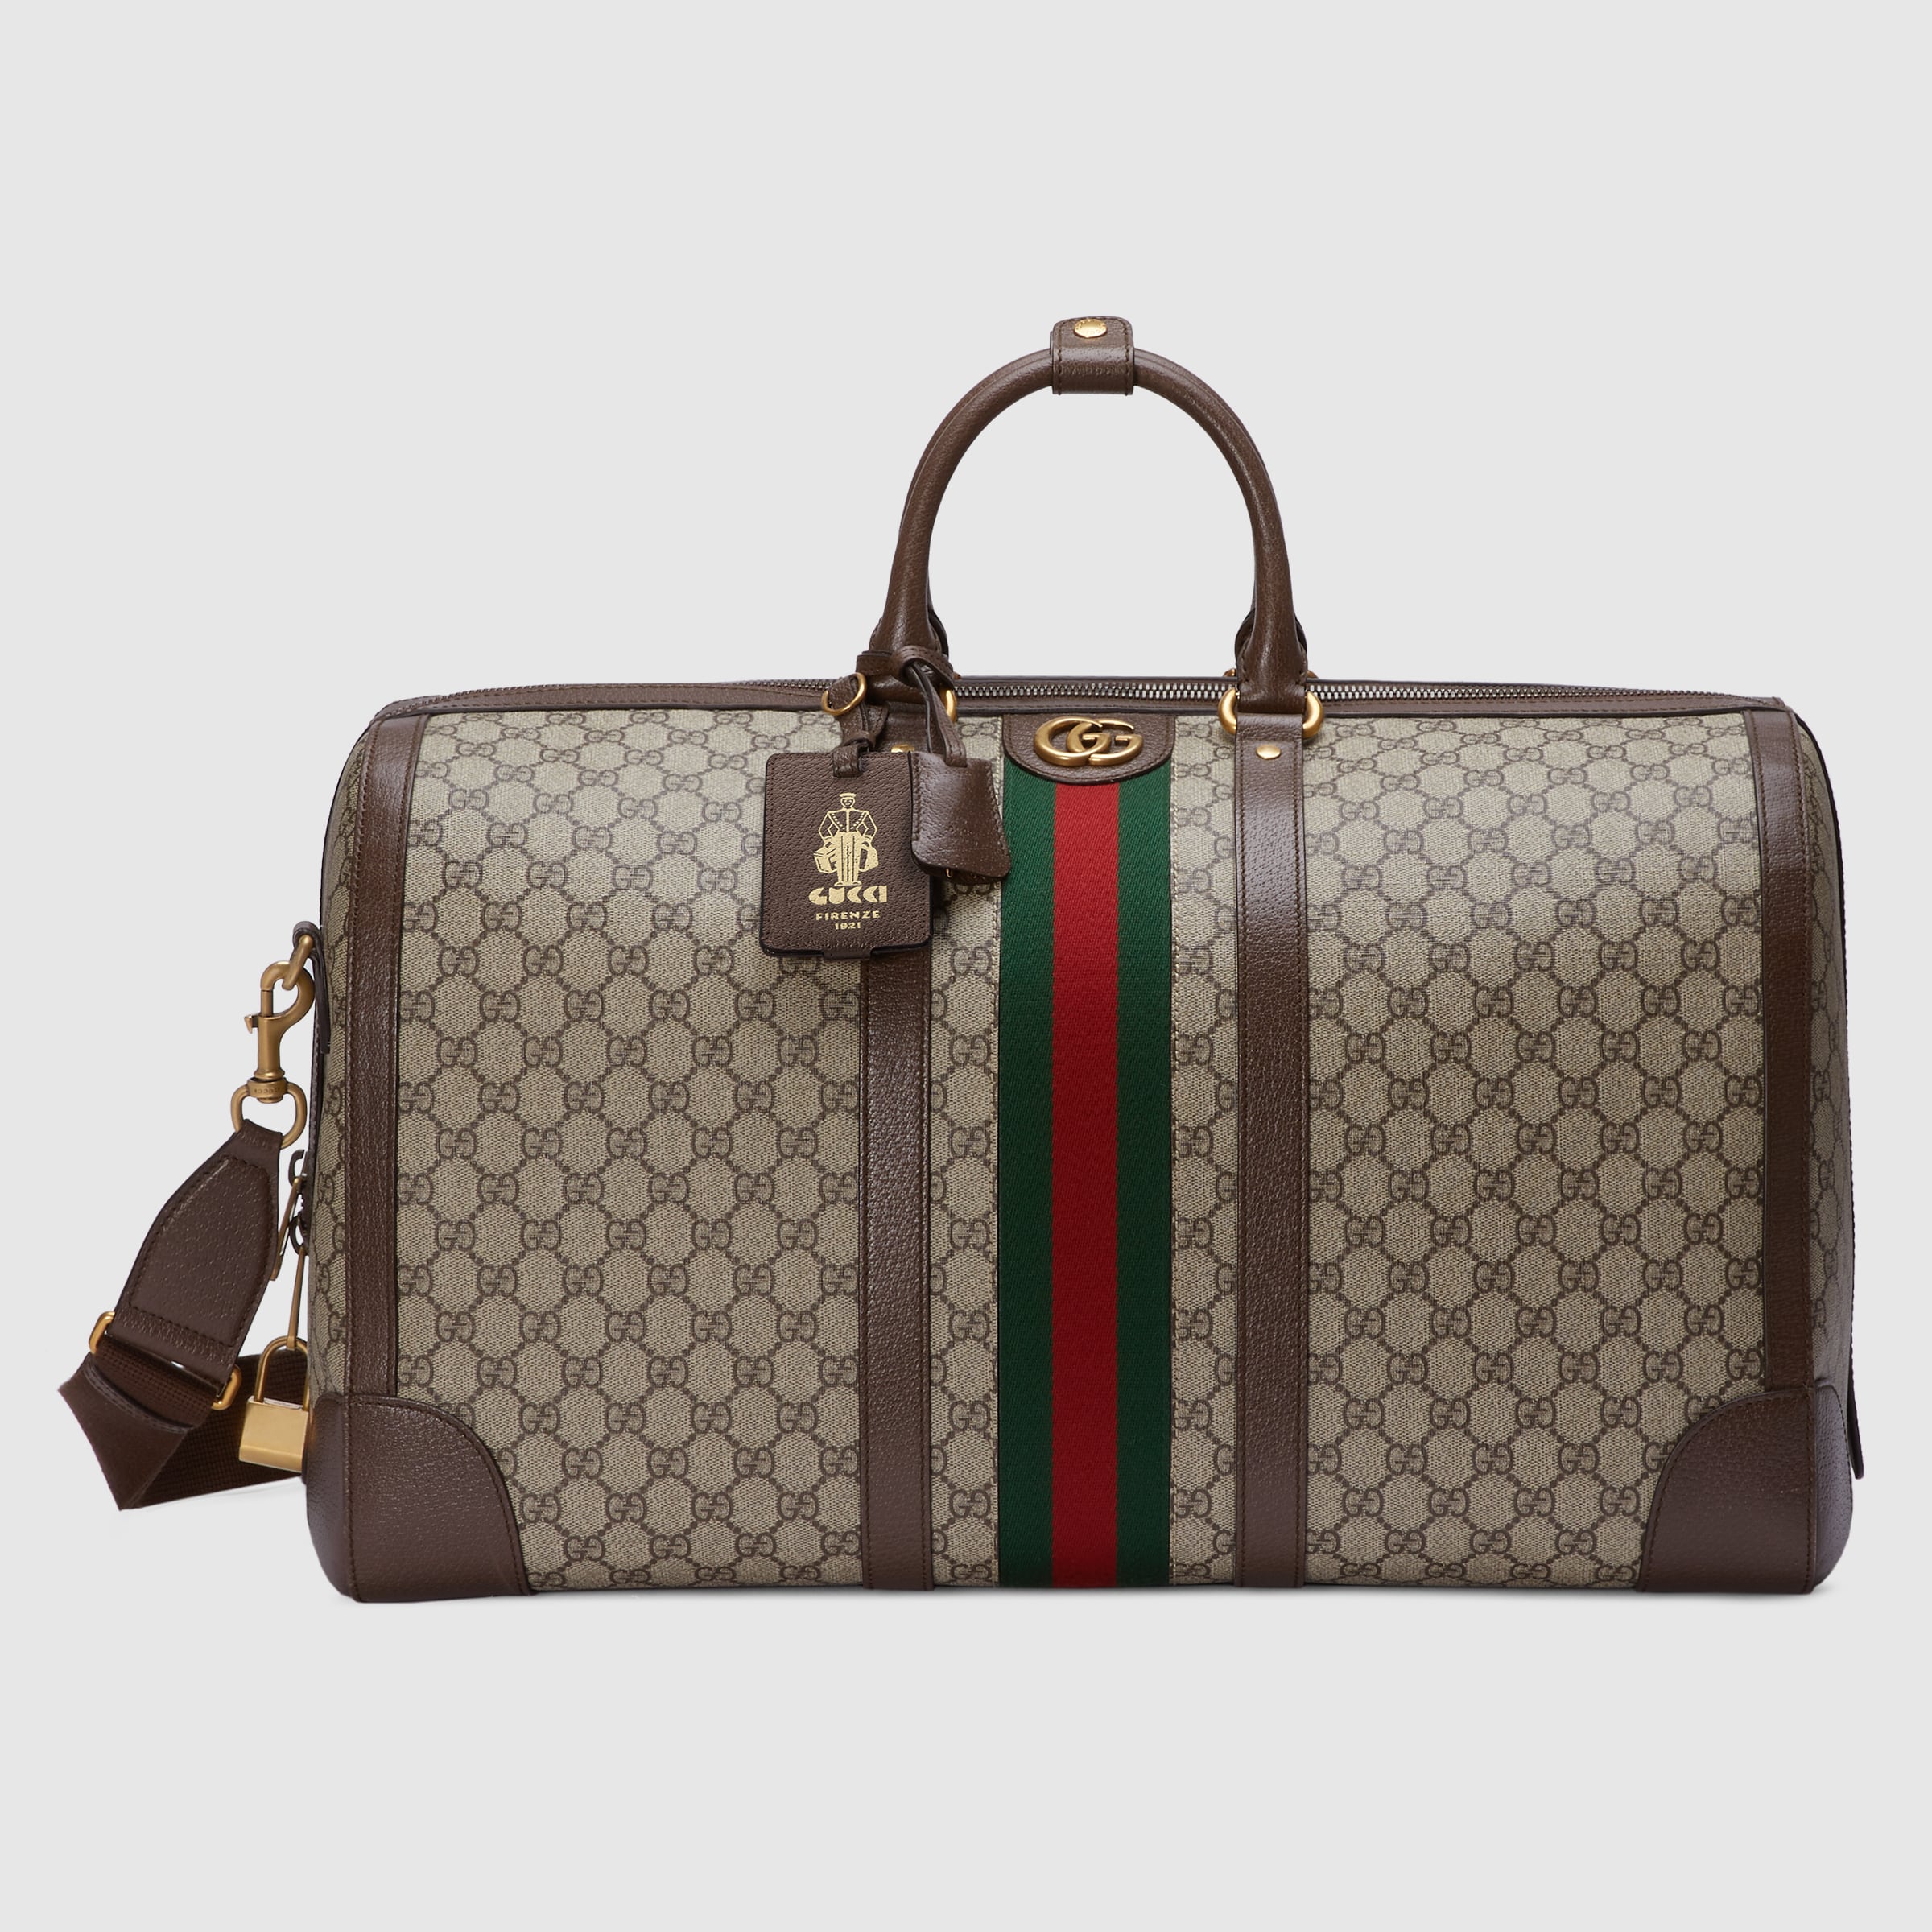 Gucci savoy large duffle bag